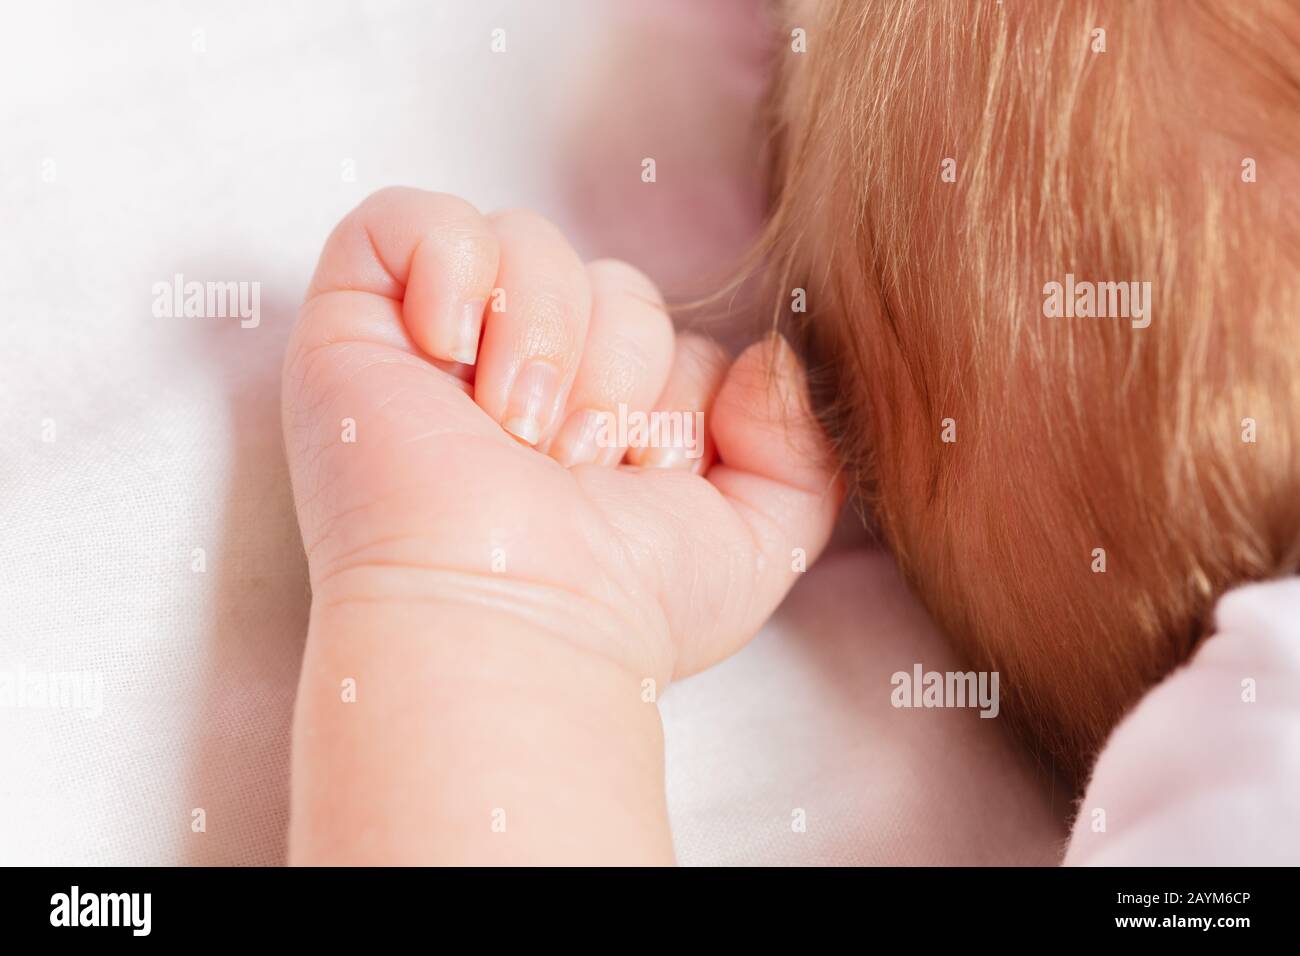 Tiny hand fist close-up of newborn infant baby boy sleeping Stock Photo